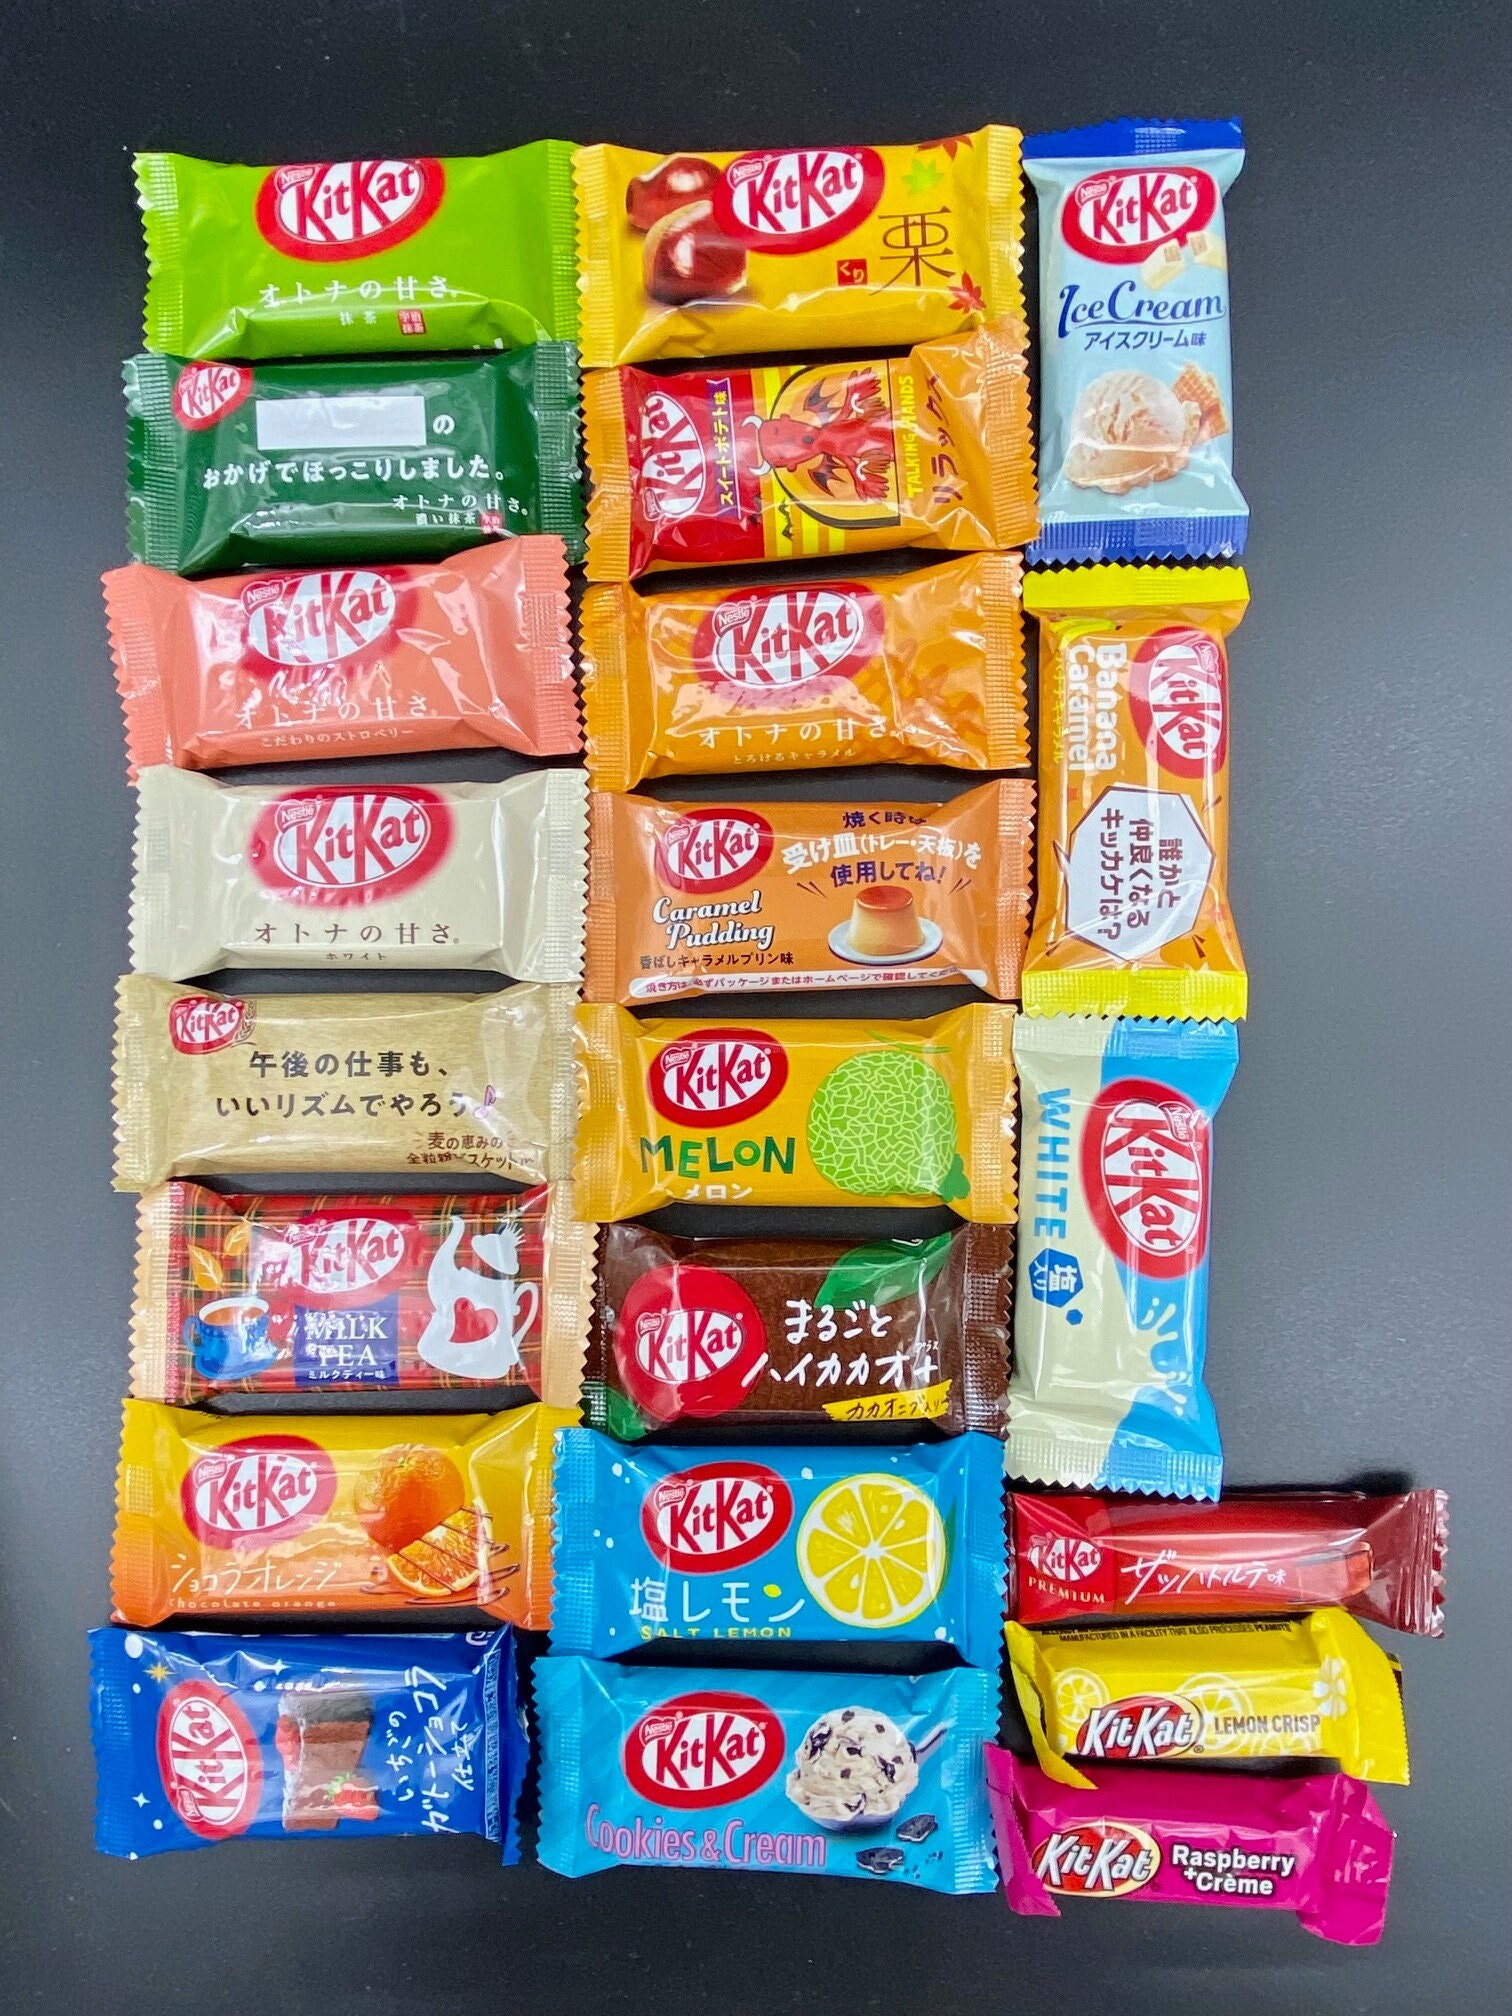 Candy Chocolate Assort Set Kit Kats Limited Flavors Loose Set